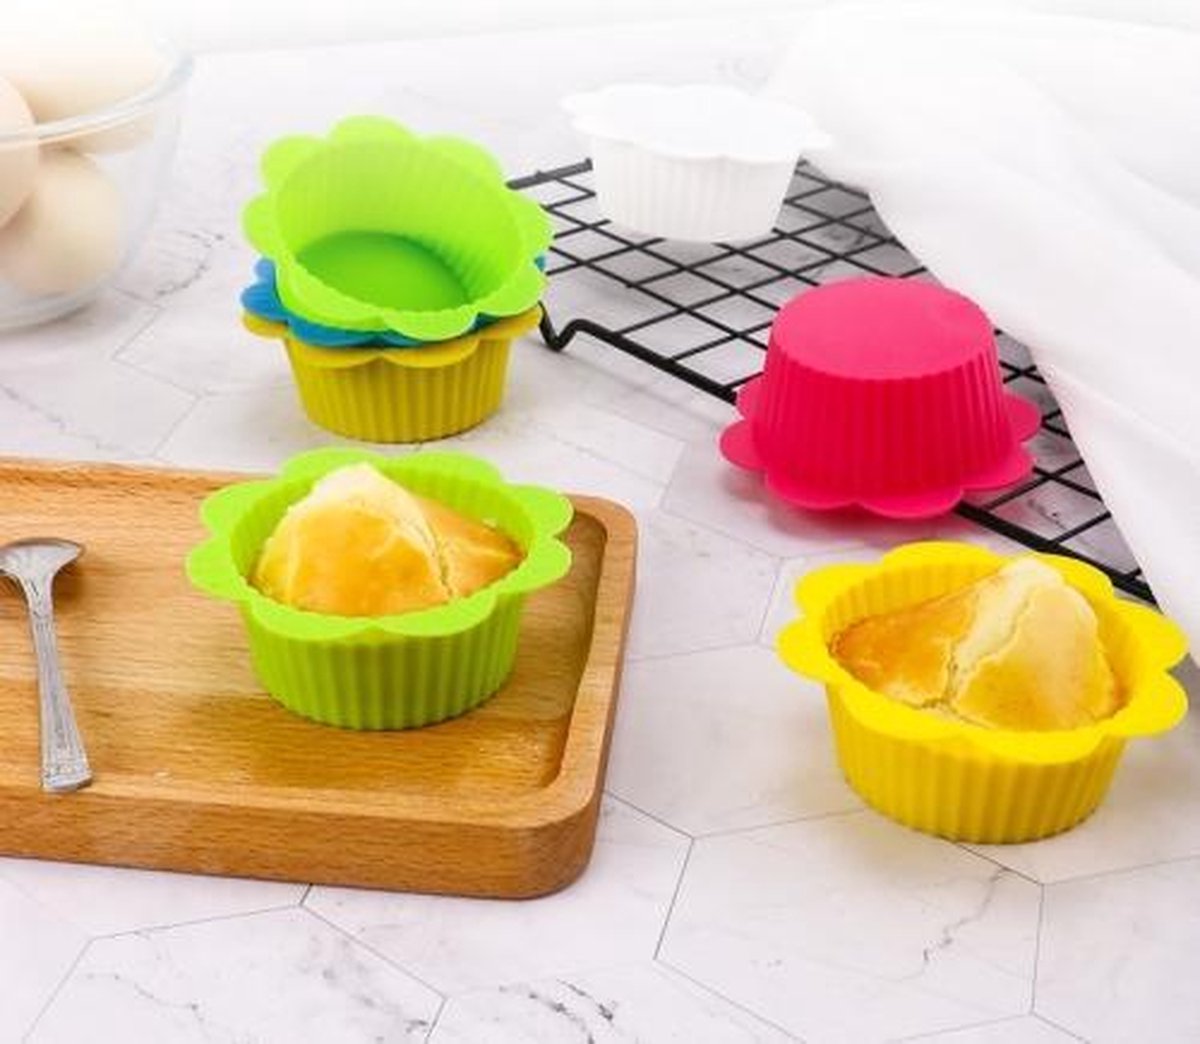 20 STKS DIY Bakvorm Macaron Kant Vorm Siliconen Cake Cup Pudding Ei Taart Muffin Cup Mold, willekeurige Kleur Levering